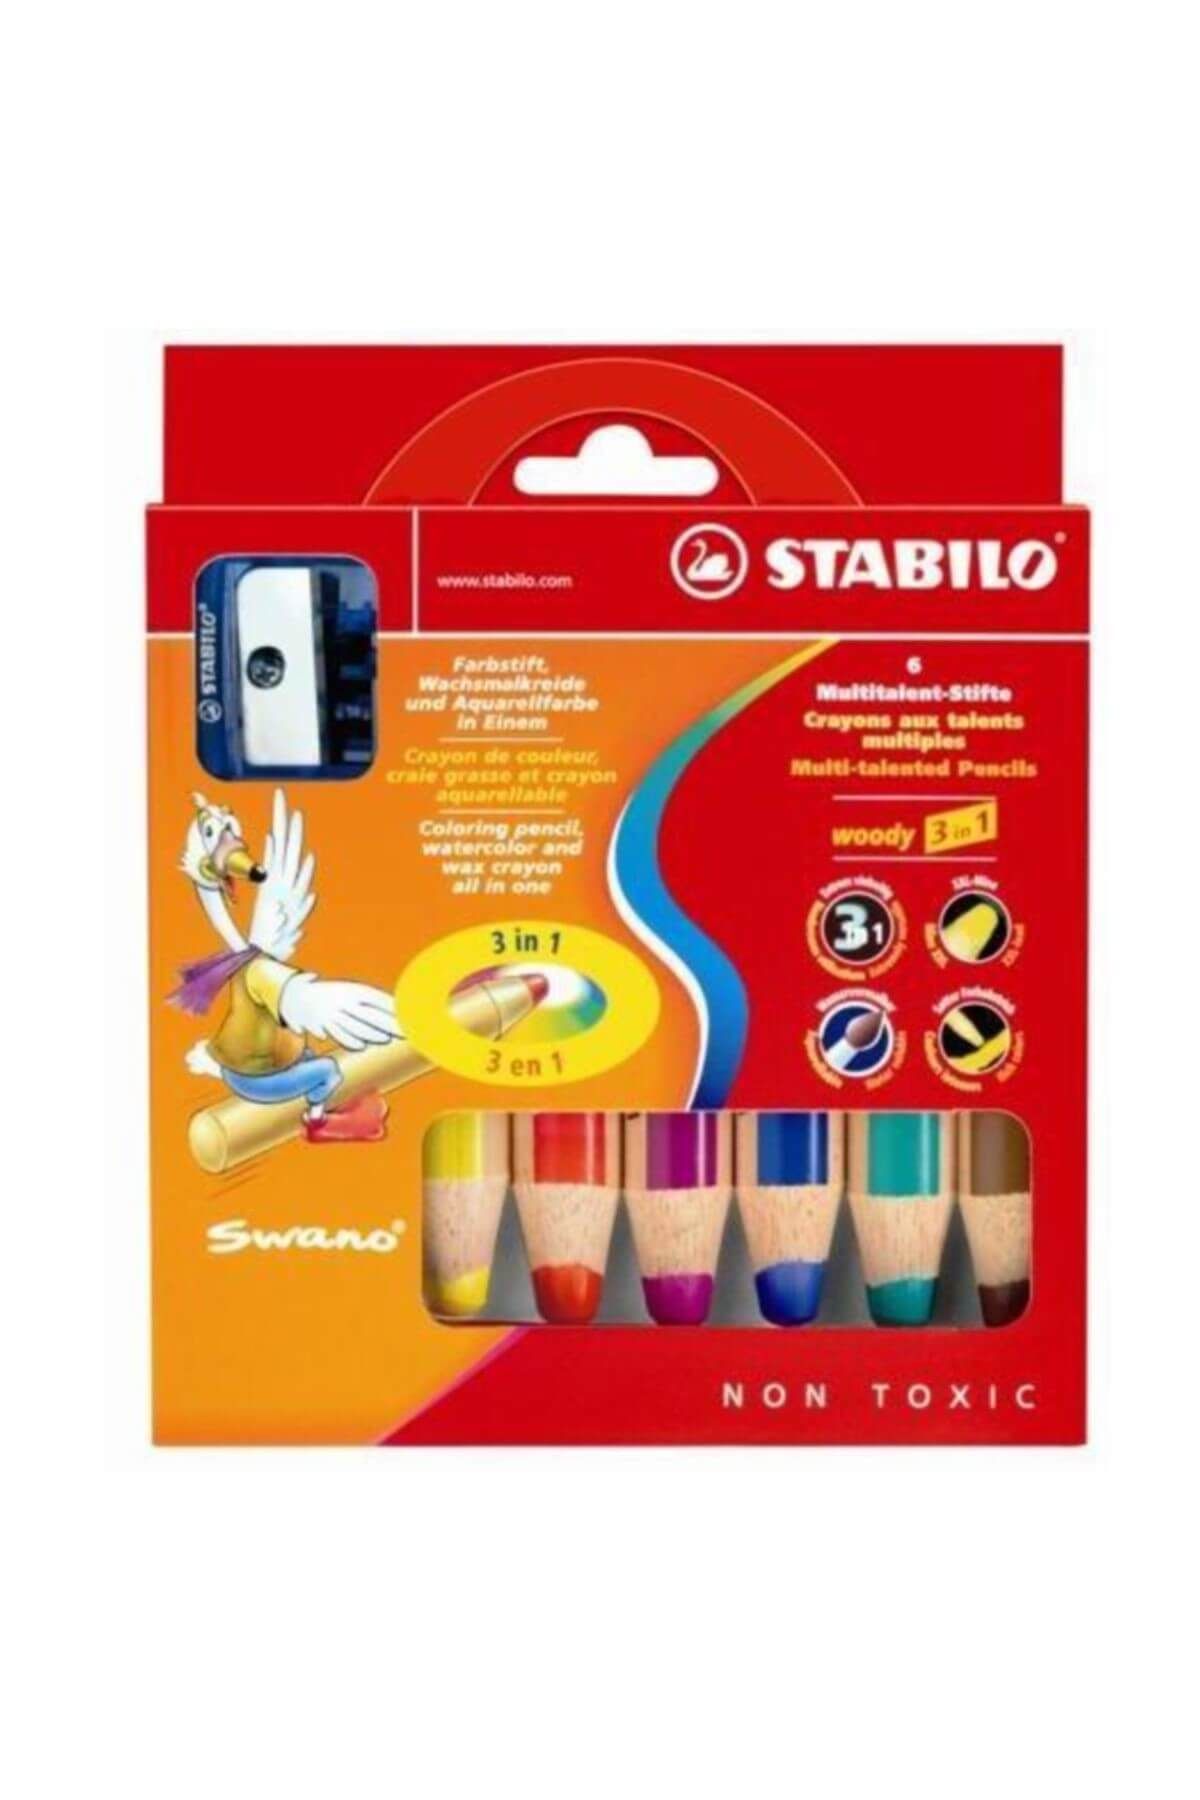 Stabilo Woody Boya Kalemi 3 İn 1 6 Renk +1 Kalemtraş Karton Kutu 8806-2